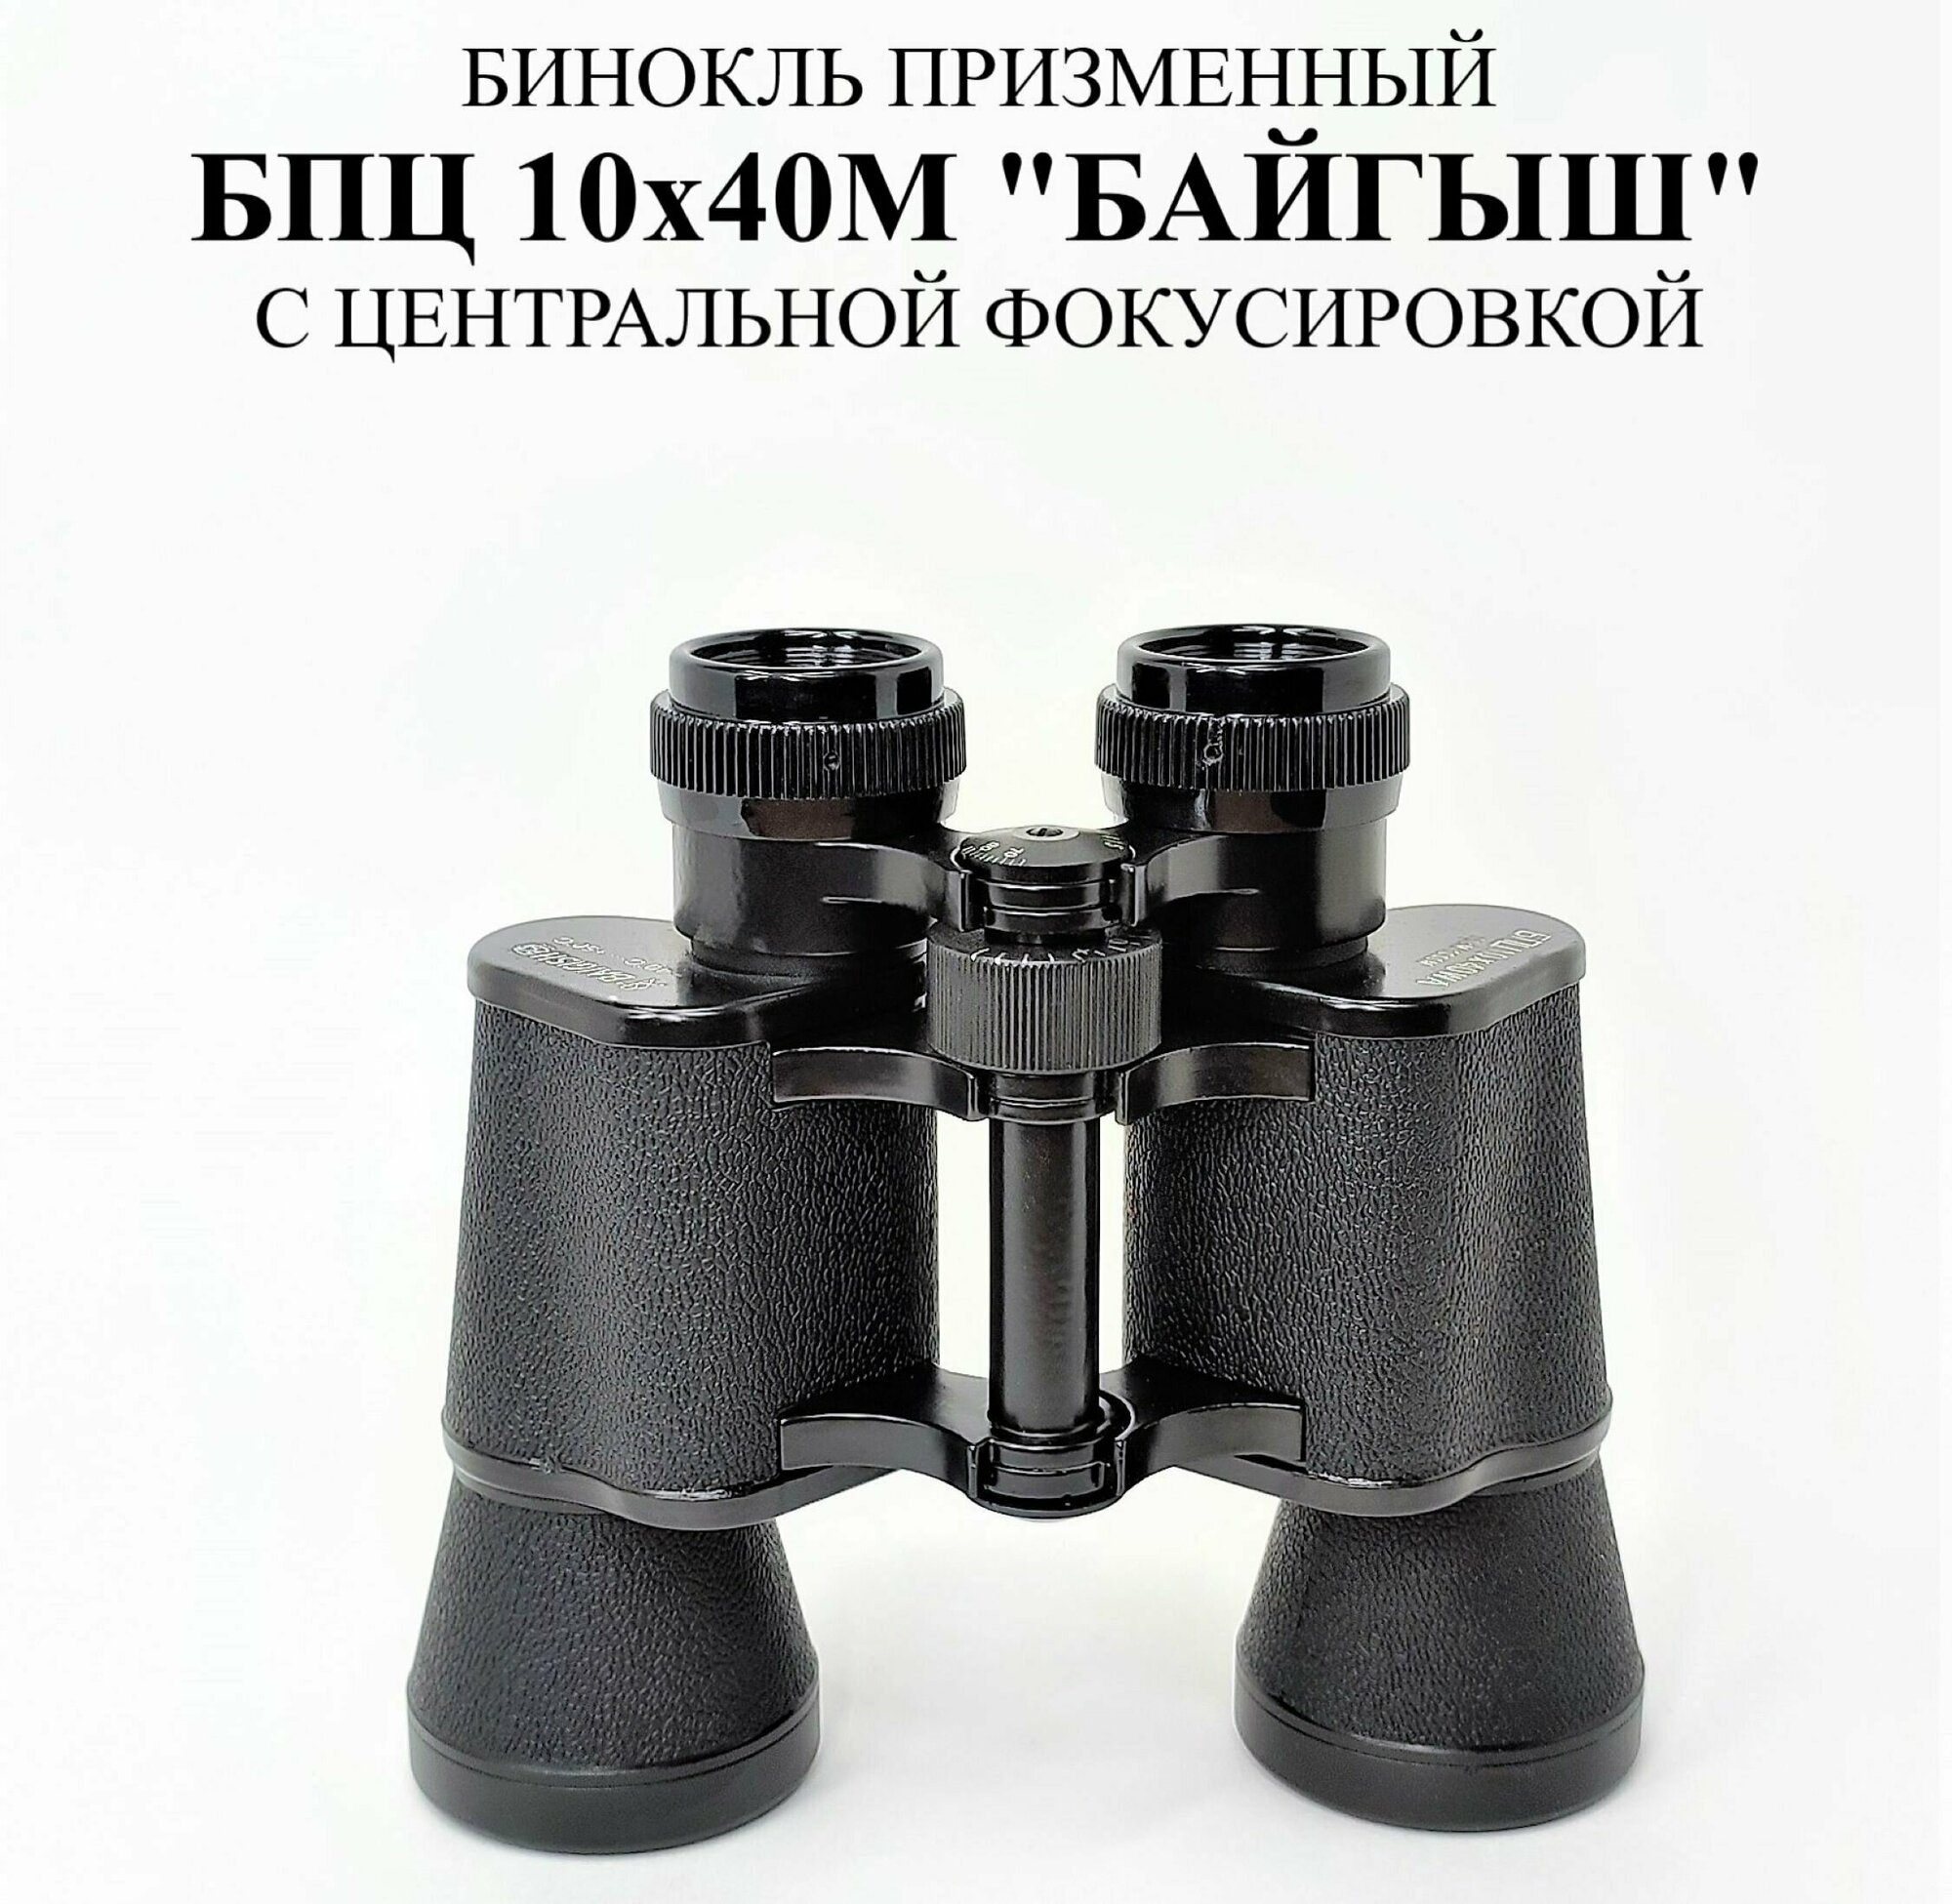 Бинокль Байгыш БПЦ2 10x40М черный